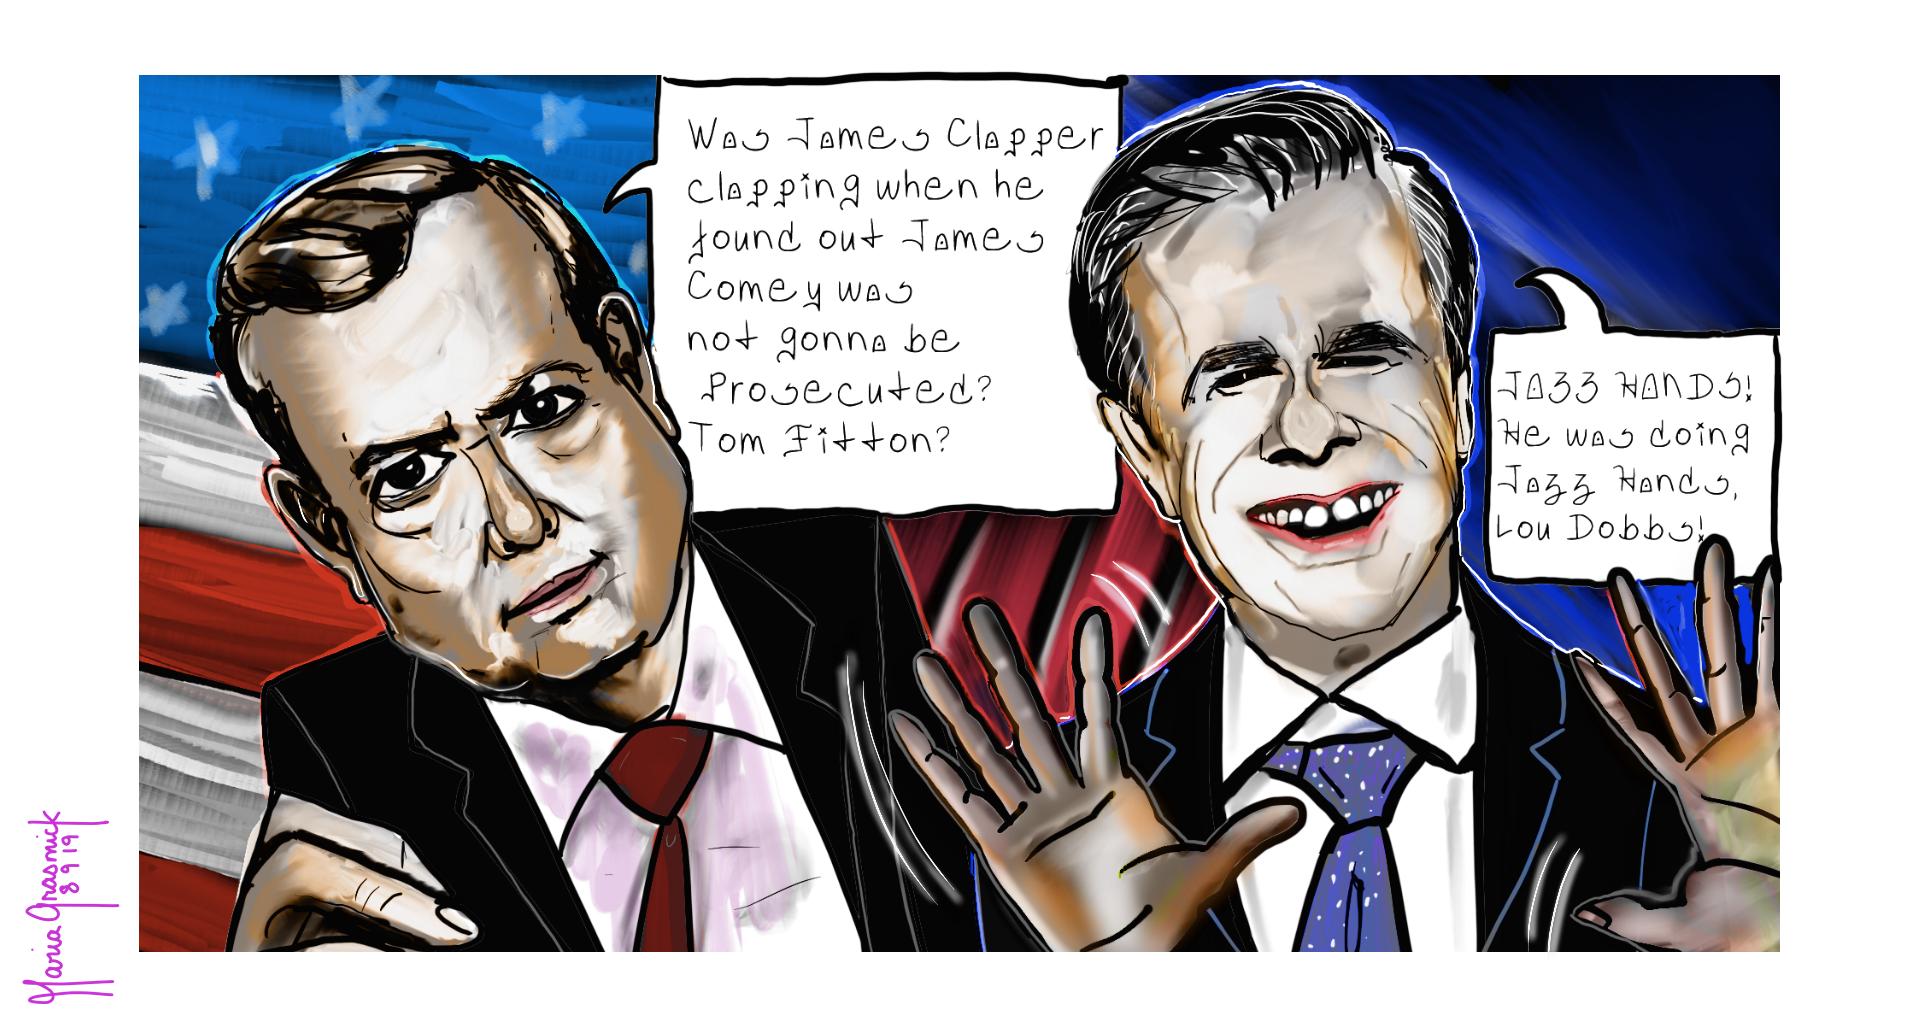 Tom Fitton Judicial Watch. Lou Dobbs. Fox News business. Political cartoon. post thumbnail image